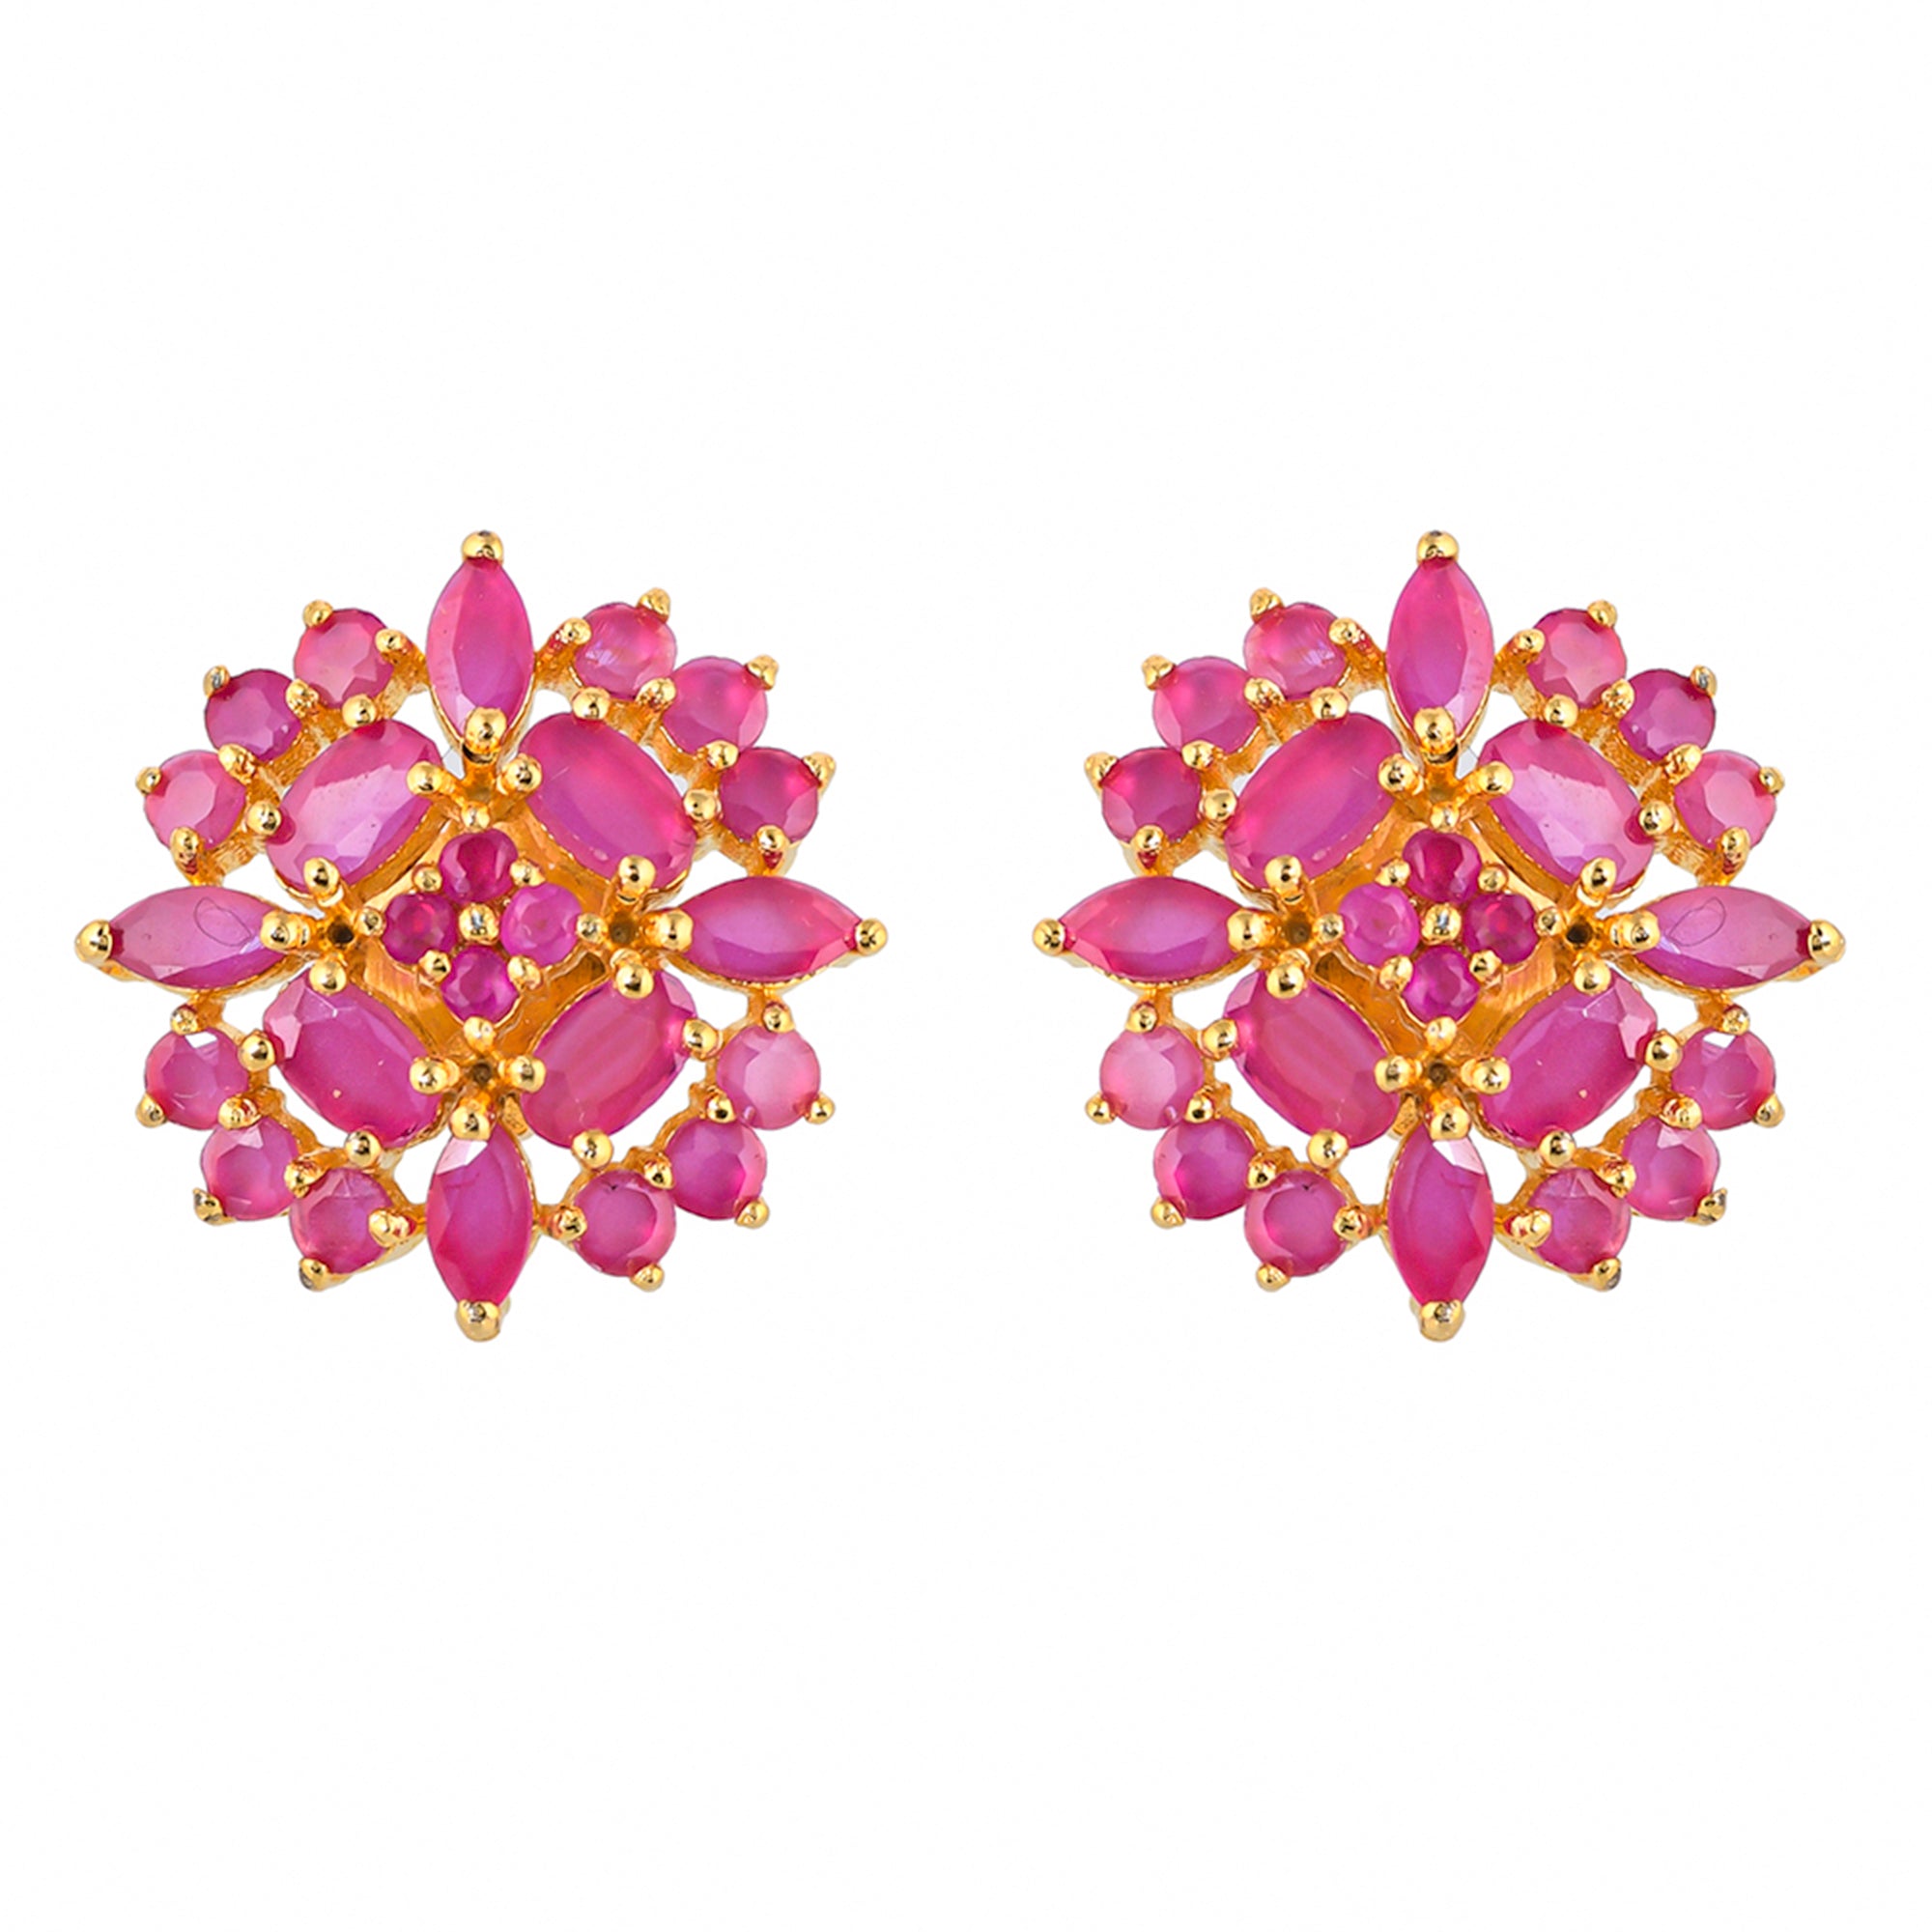 Cluster Setting Pink CZ Gems Stud Earrings